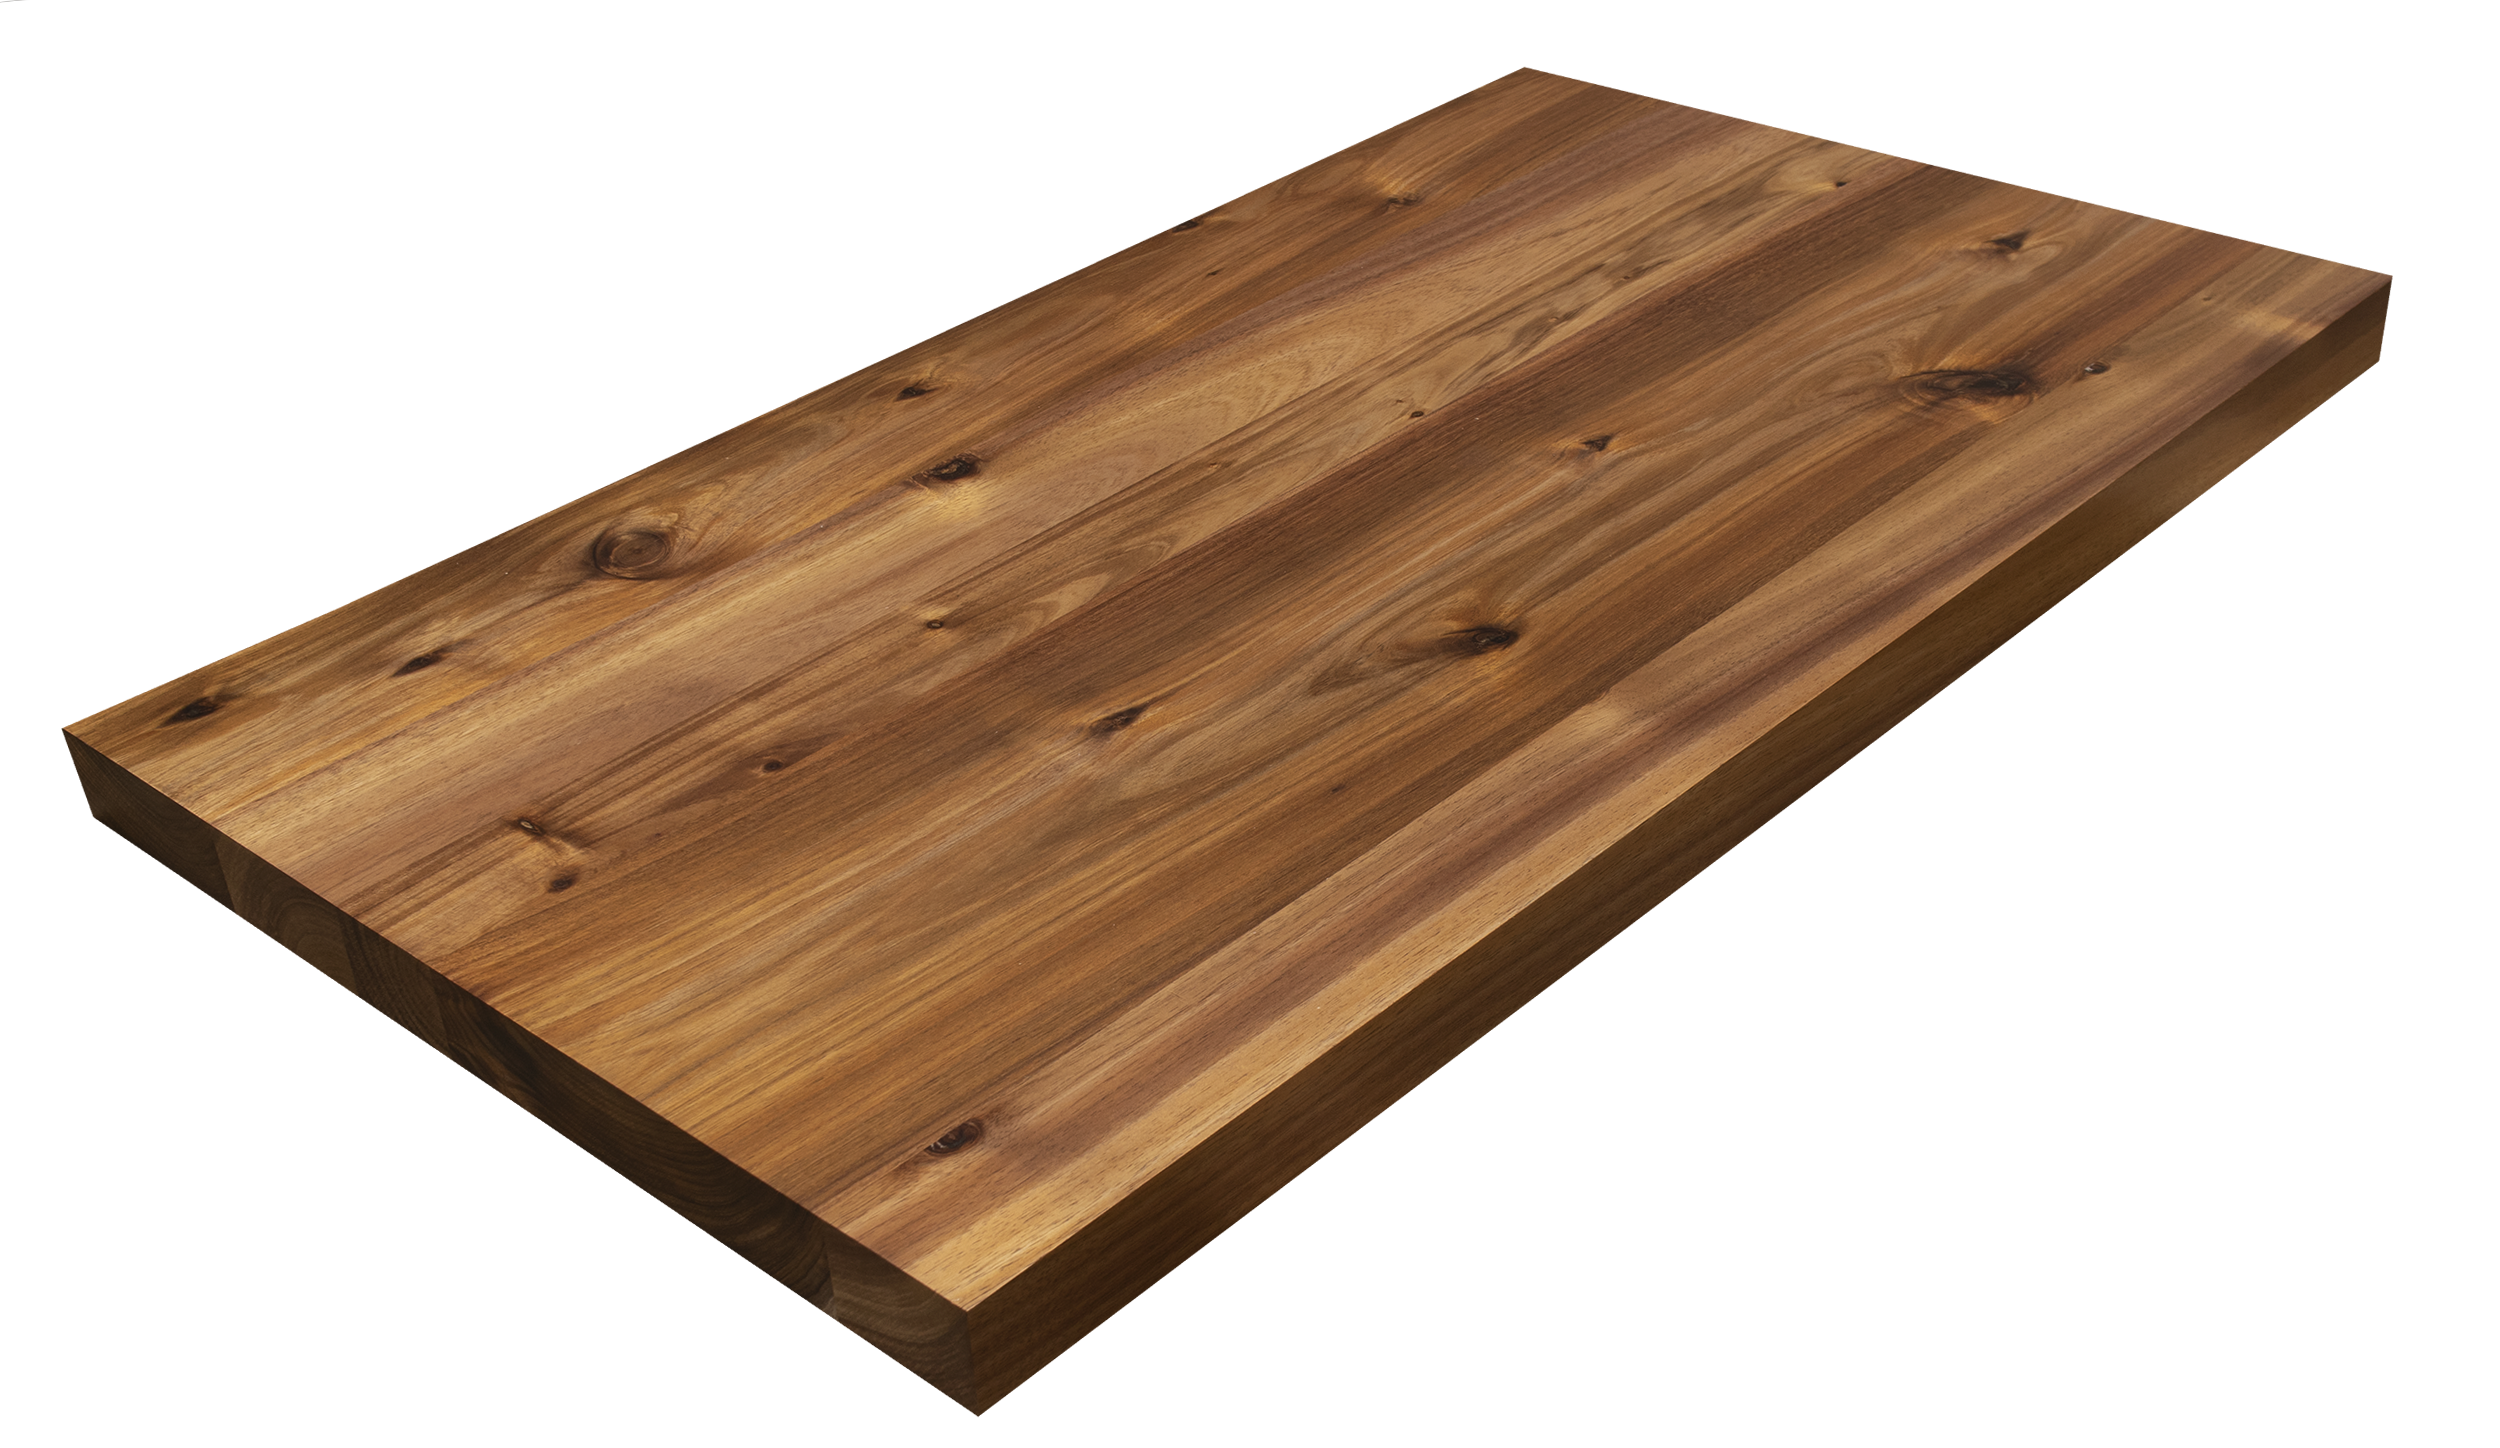 Wooden Chopping Board Set Blank Kitchen Acacia Wood Butcher